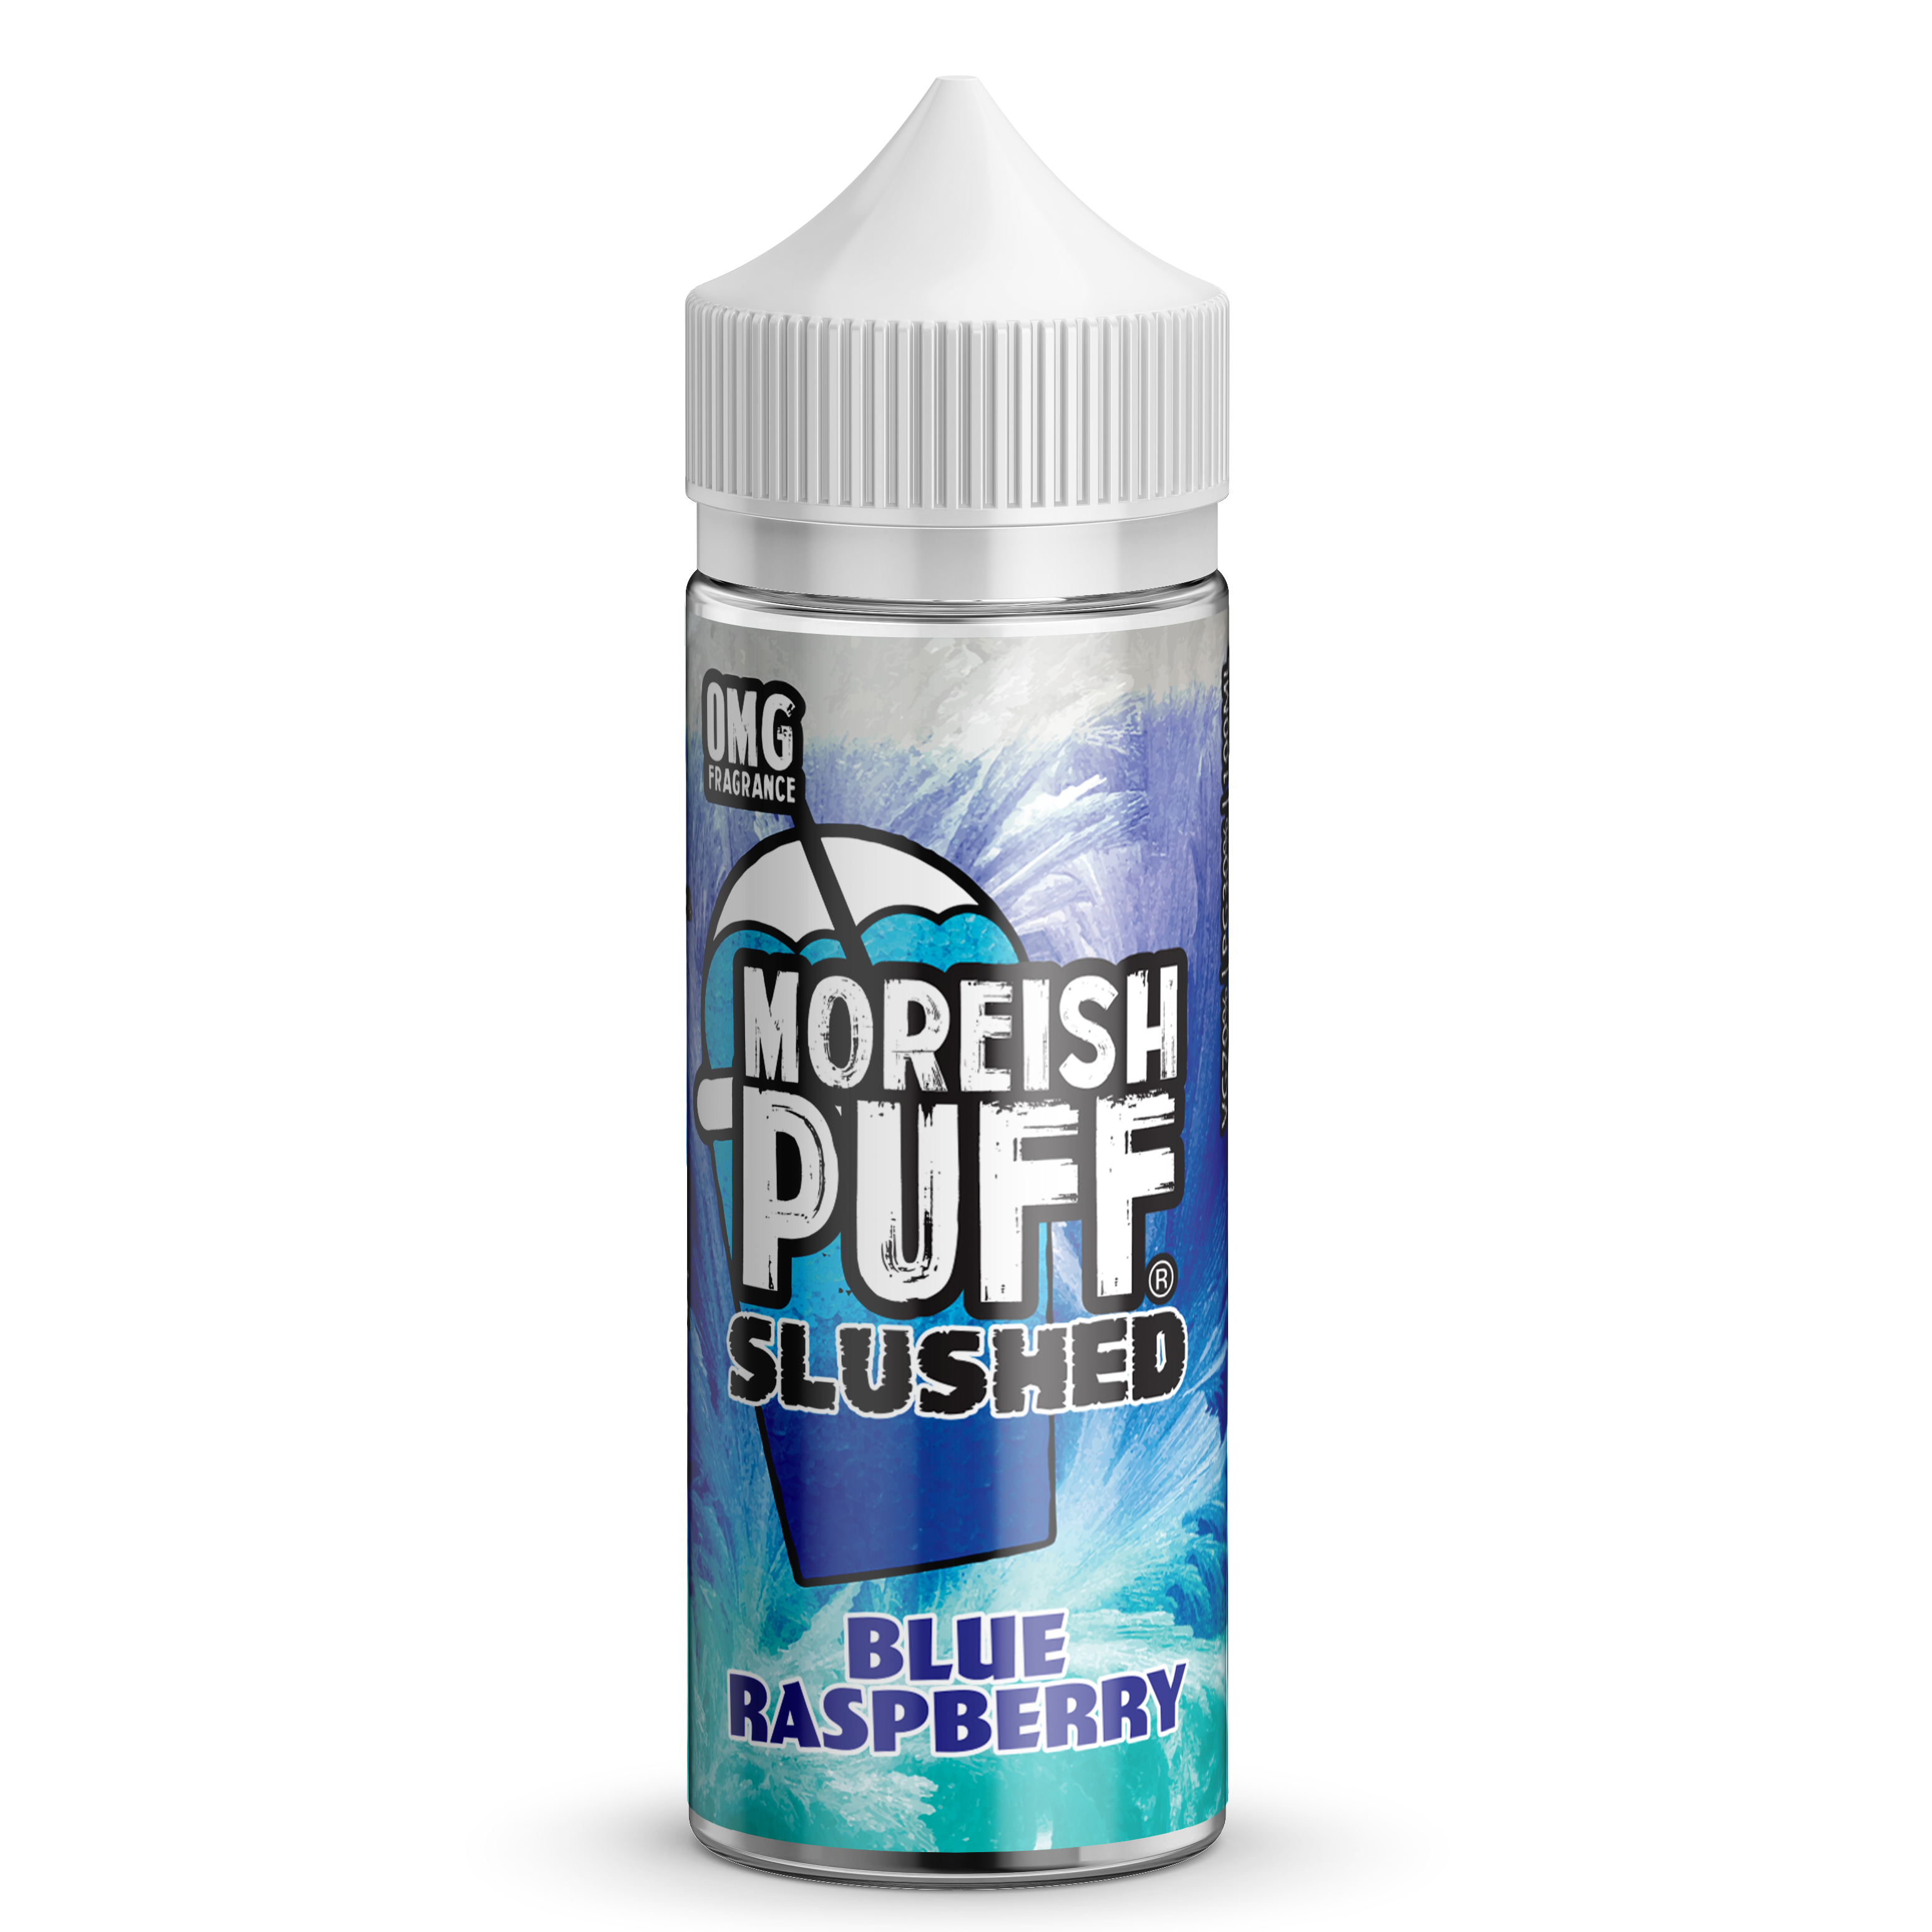 Moreish Puff Slushed Blue Raspberry 0mg 100ml Shortfill E-Liquid-DON'T INCLUDE